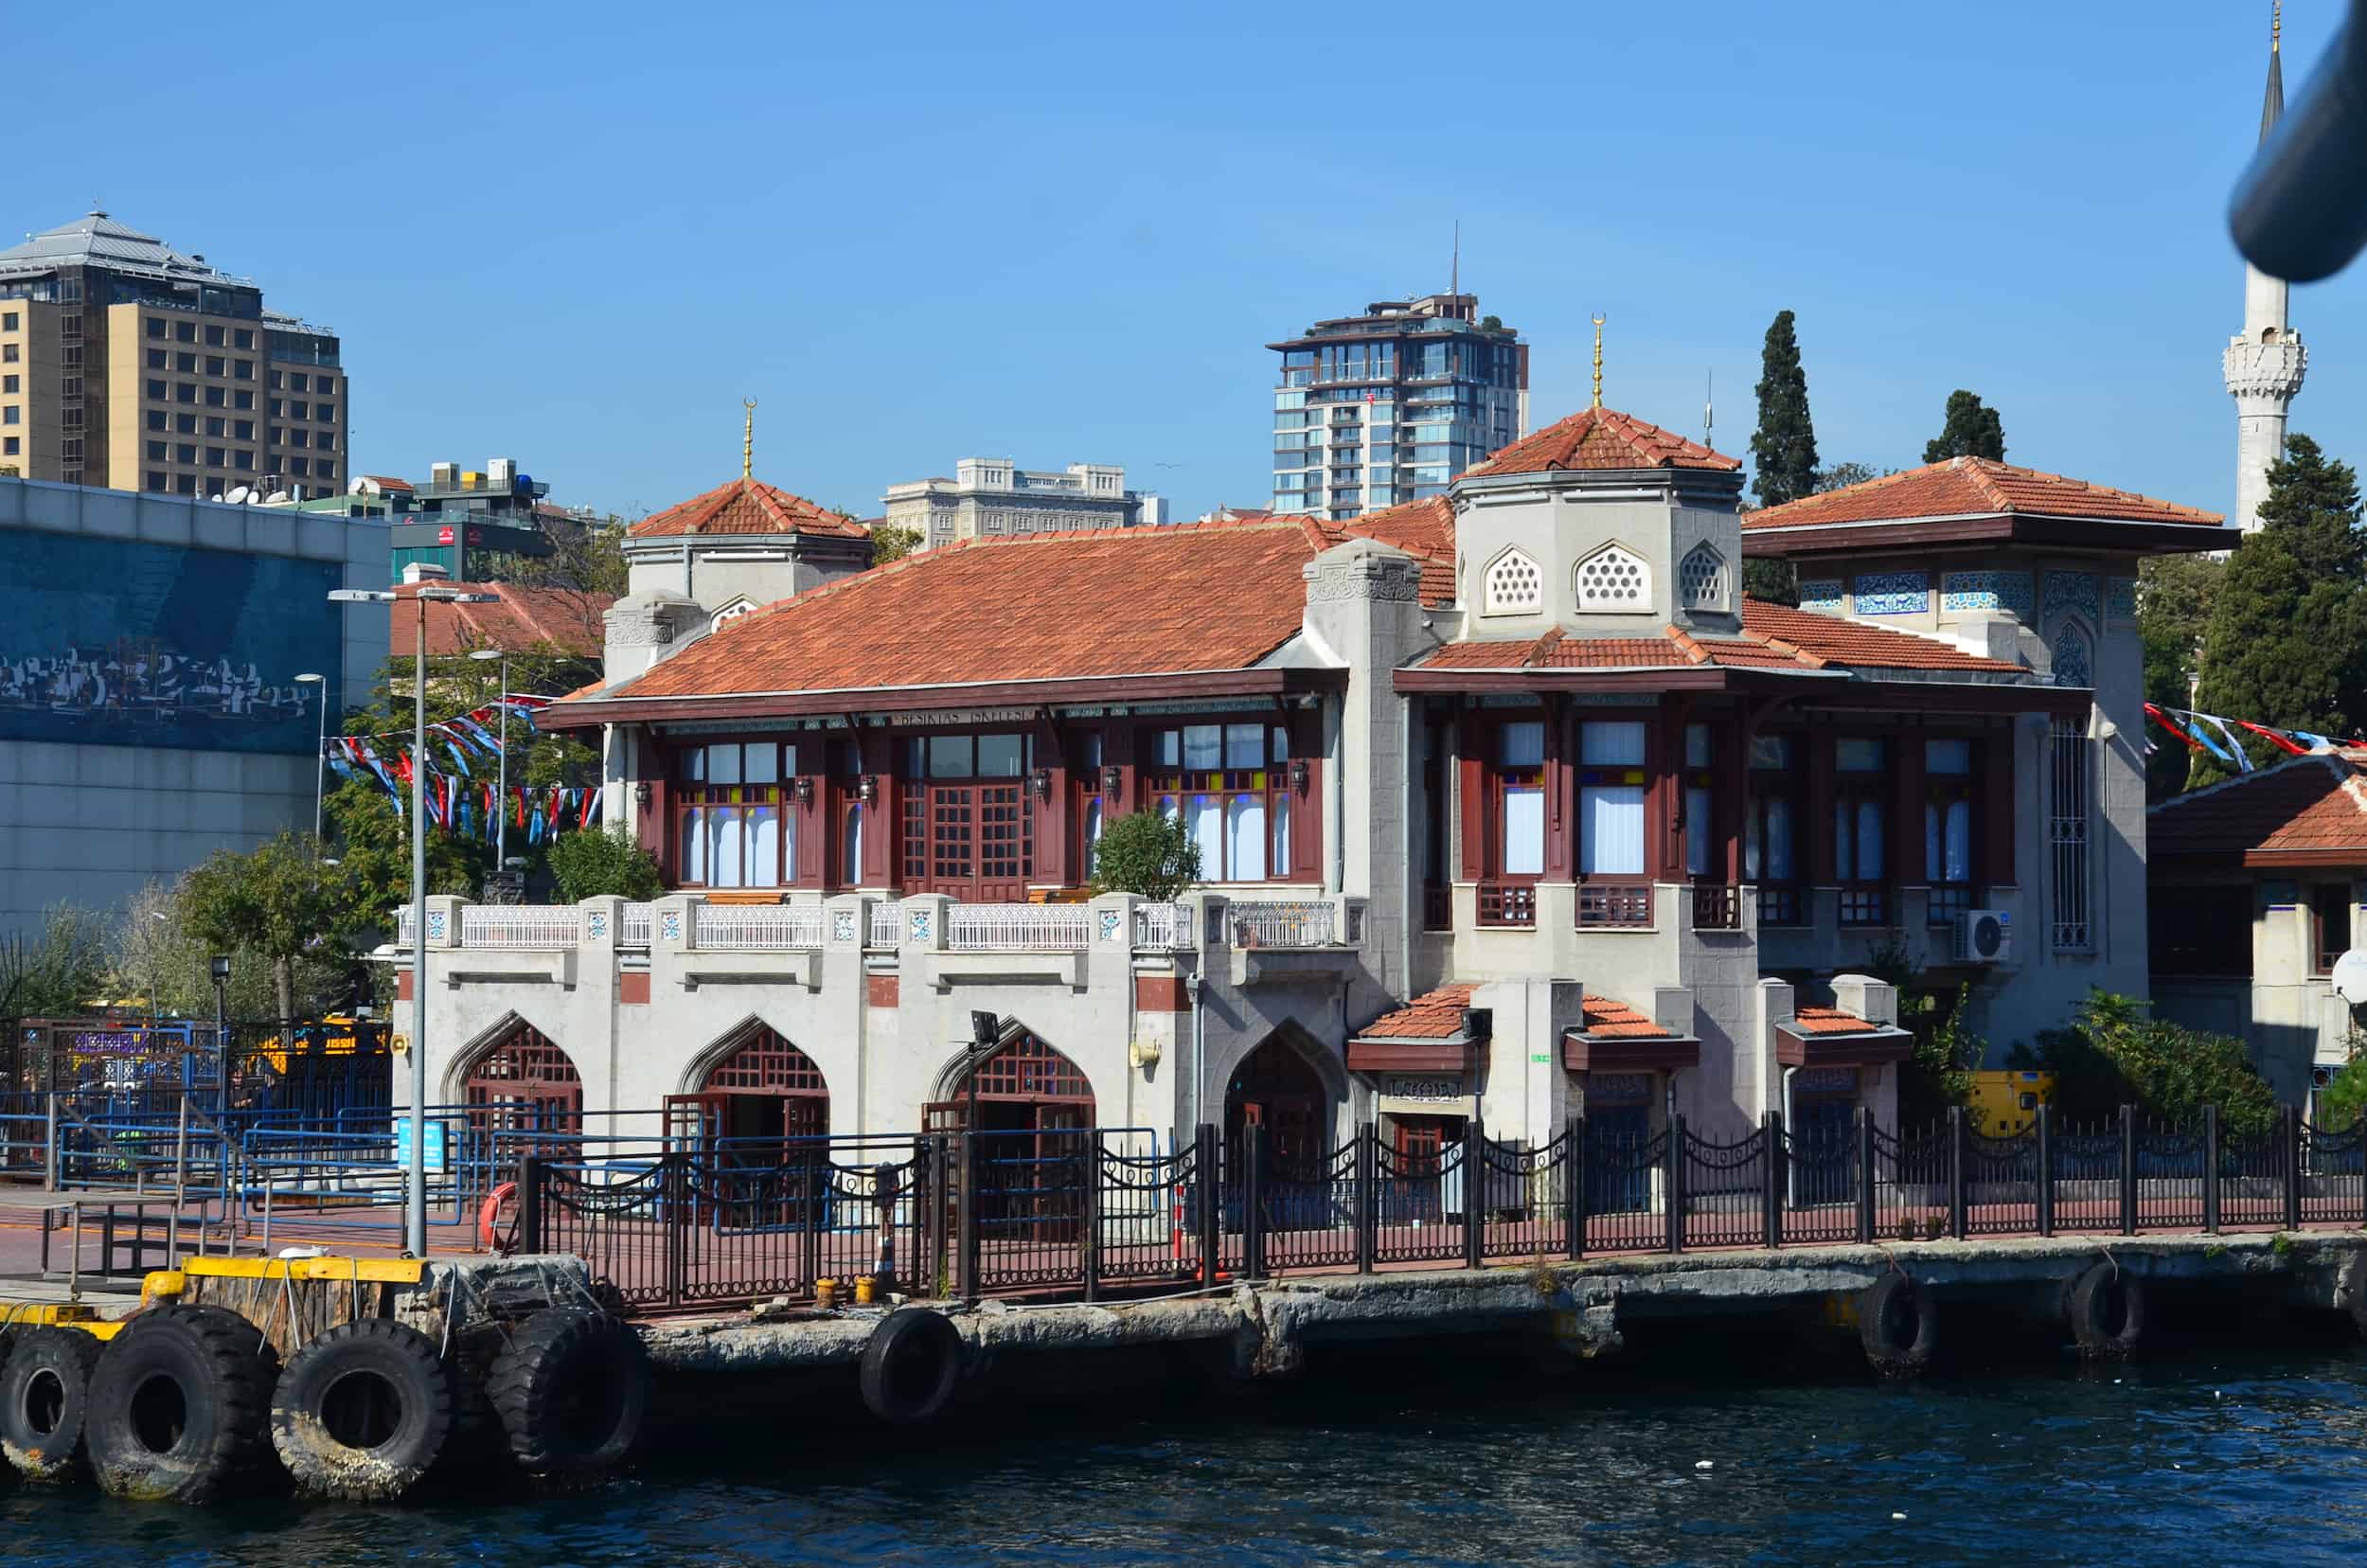 Beşiktaş Pier in Beşiktaş, Istanbul, Turkey